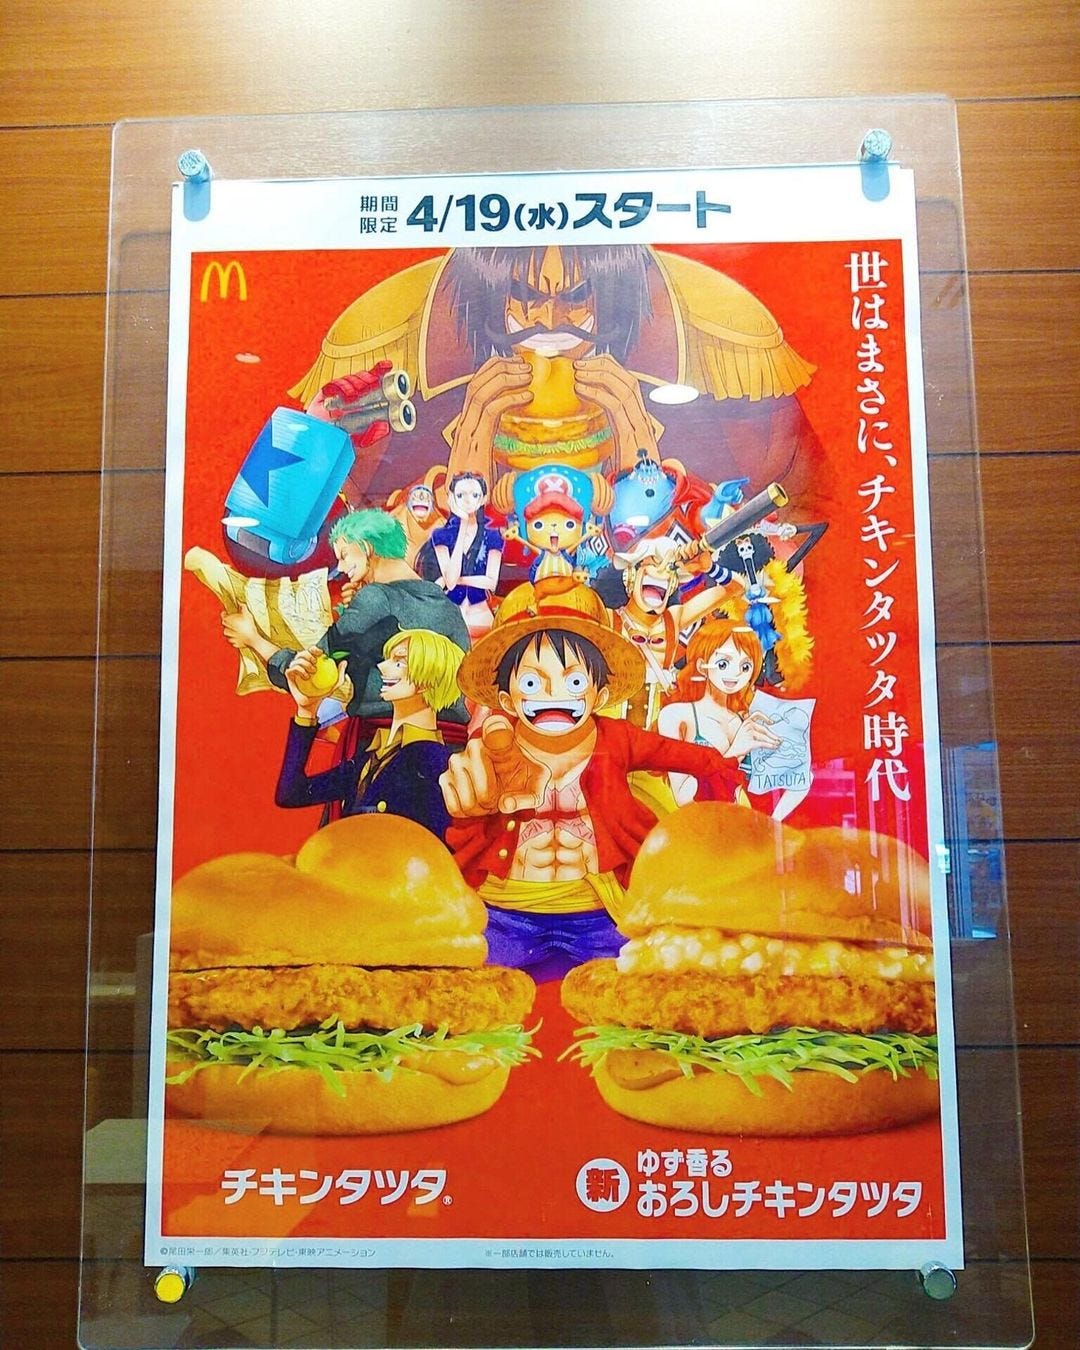 McDonald's Announces Collaboration Campaign With One Piece - Anime Corner